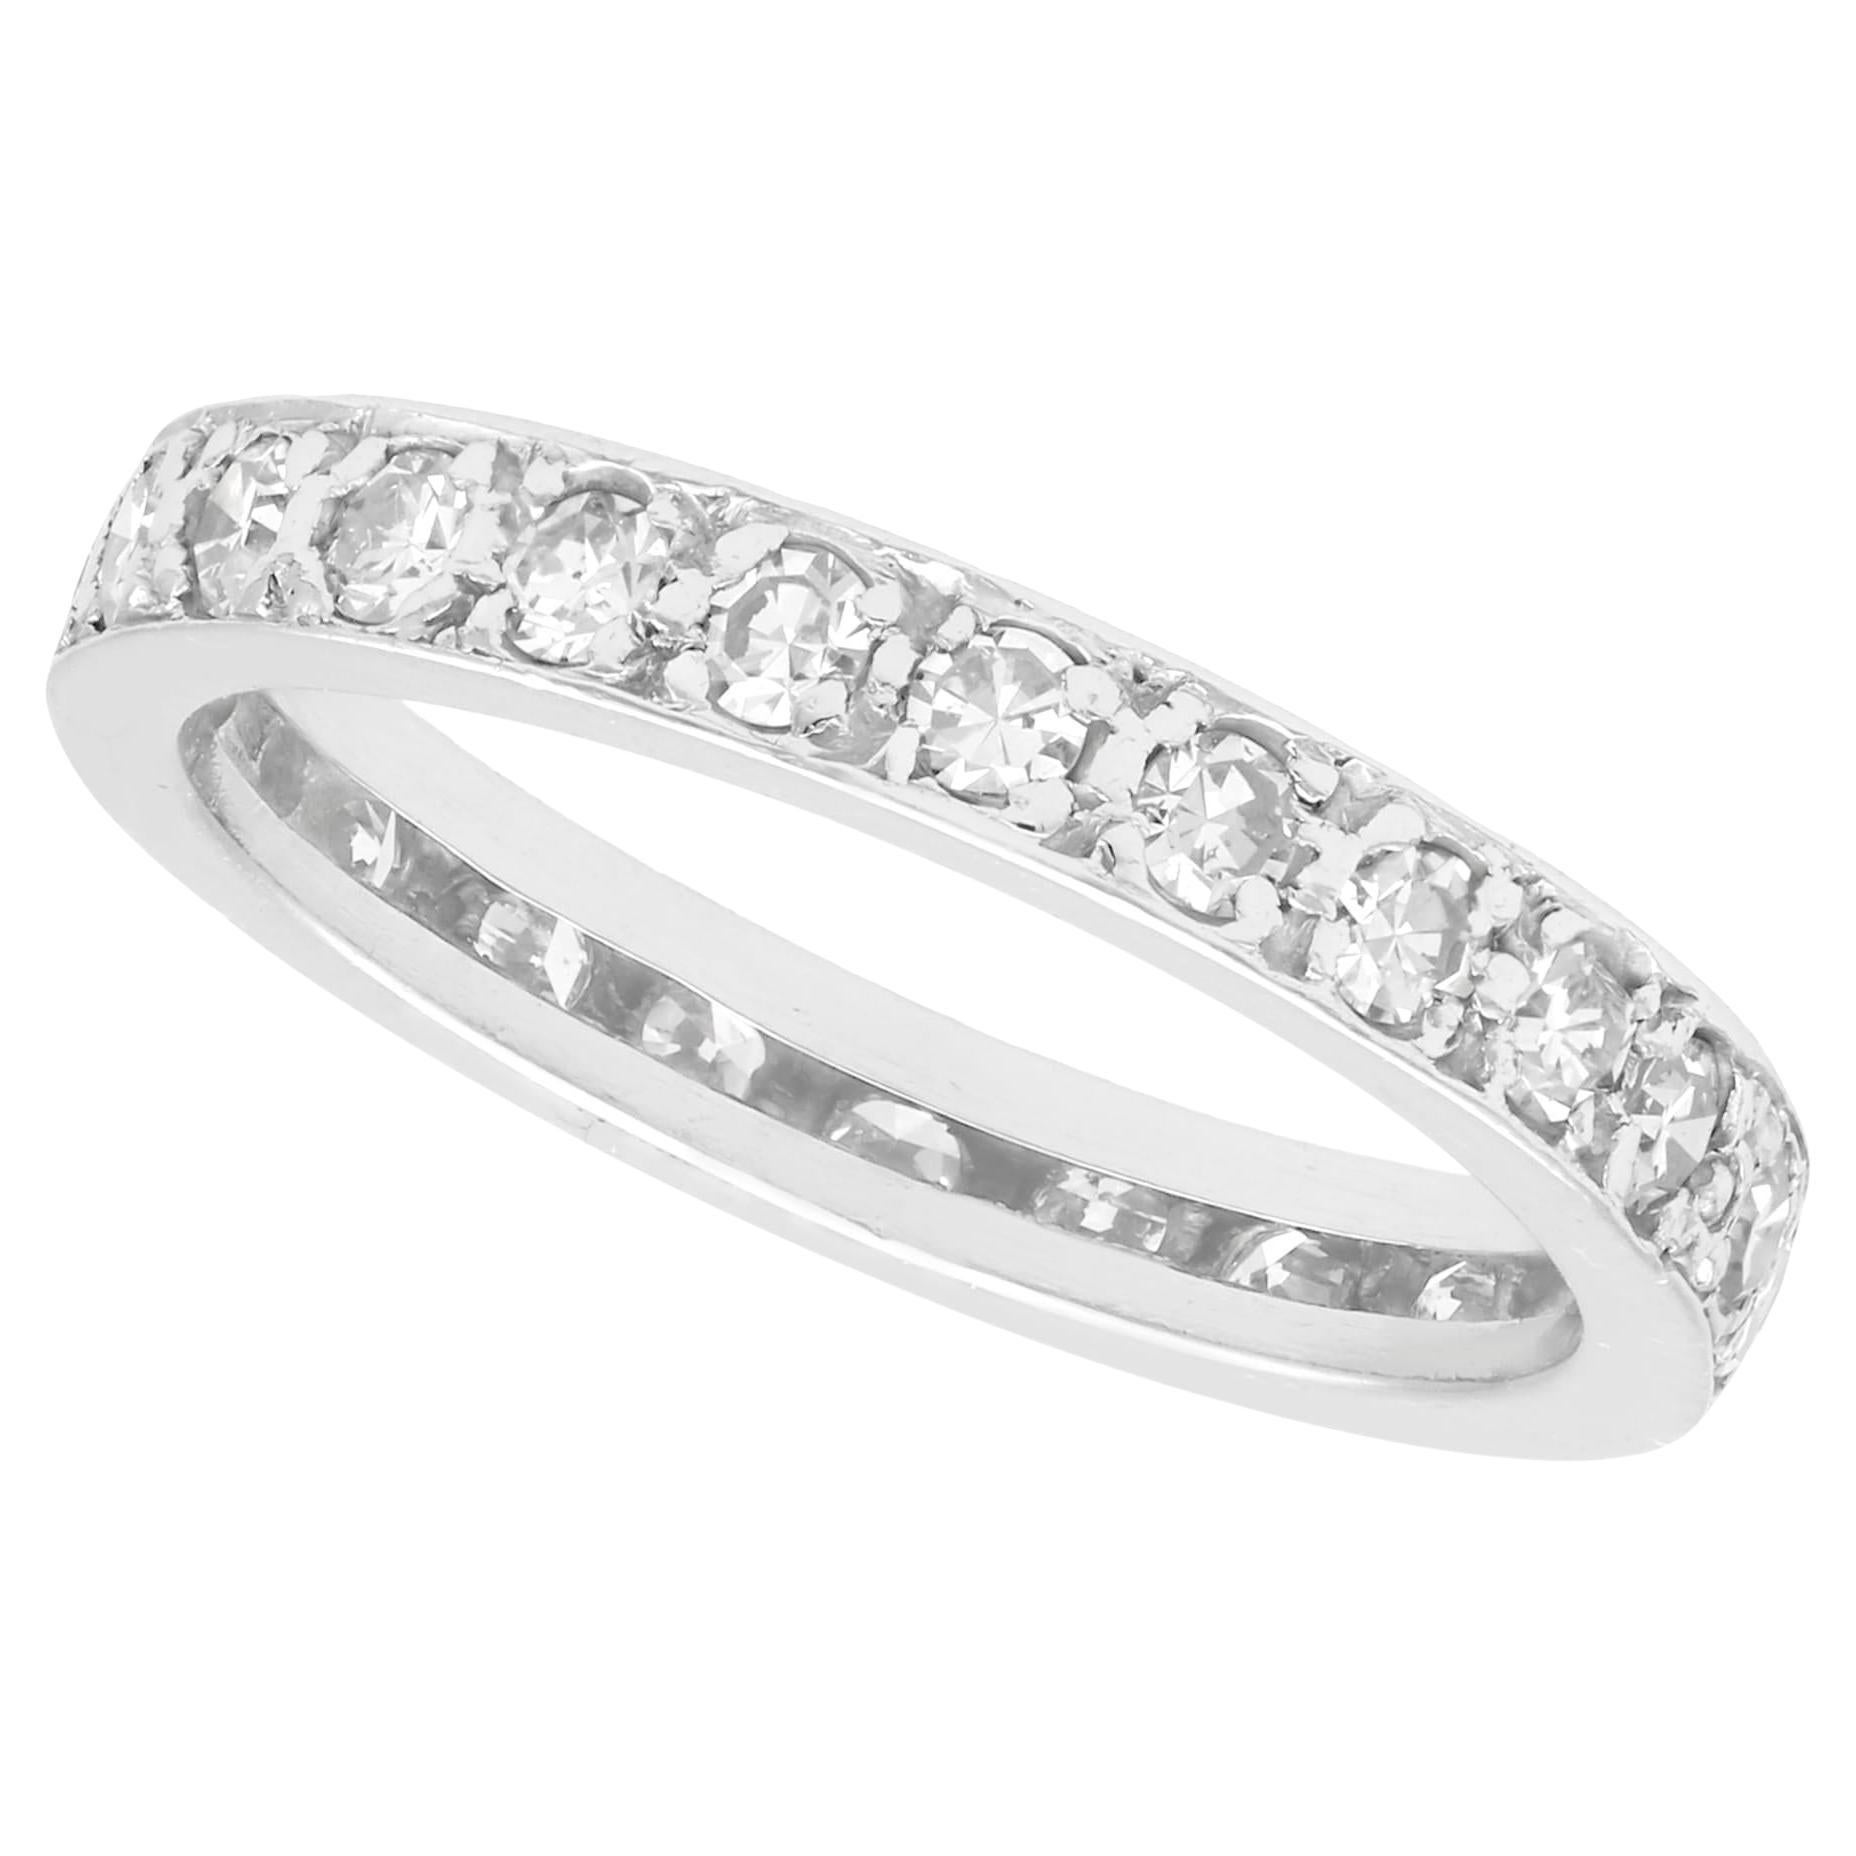 Antique 1930s Diamond and 18K White Gold Full Eternity Engagement Ring For Sale